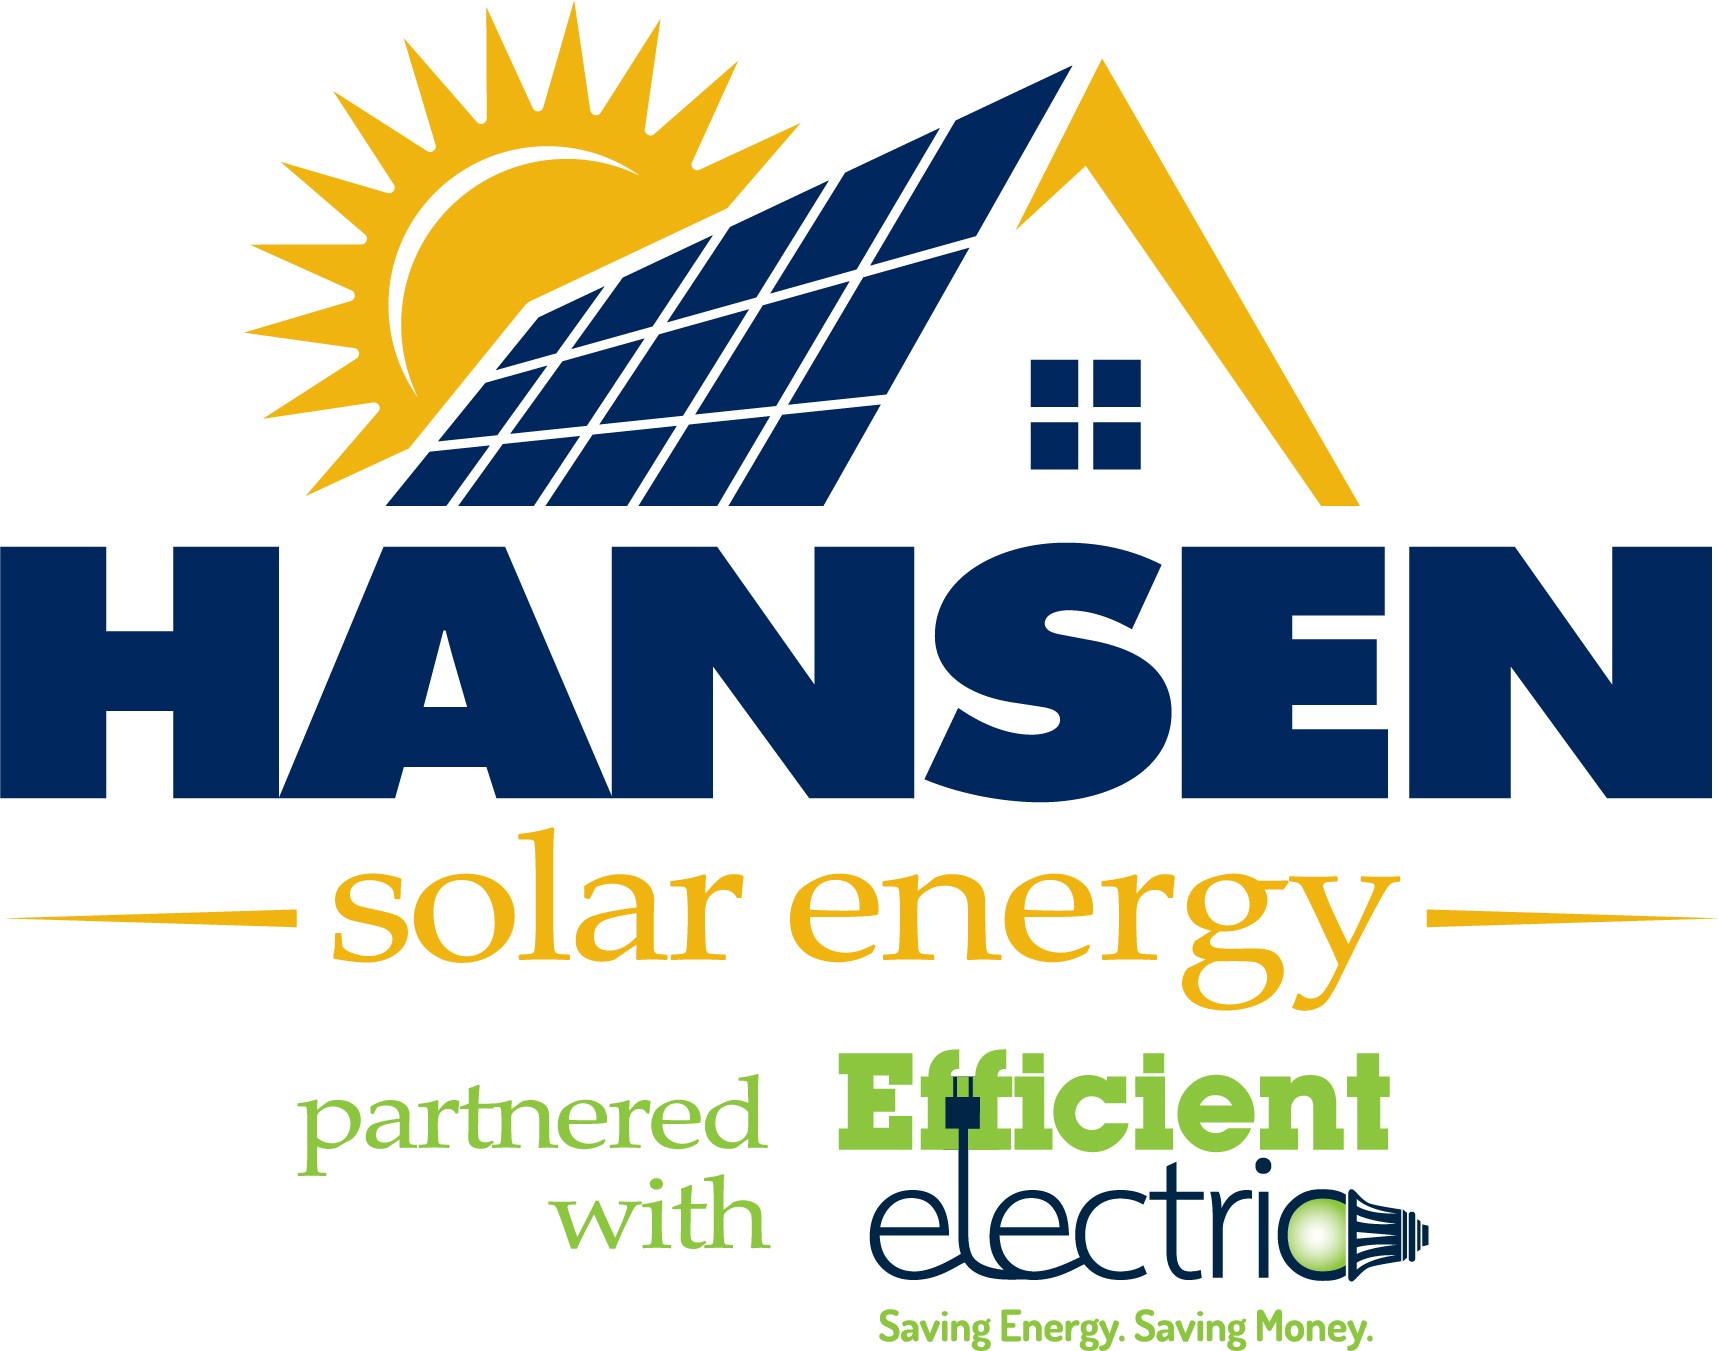 Hansen Solar Energy - Partnered with Efficient Electric - solar power - solar panels